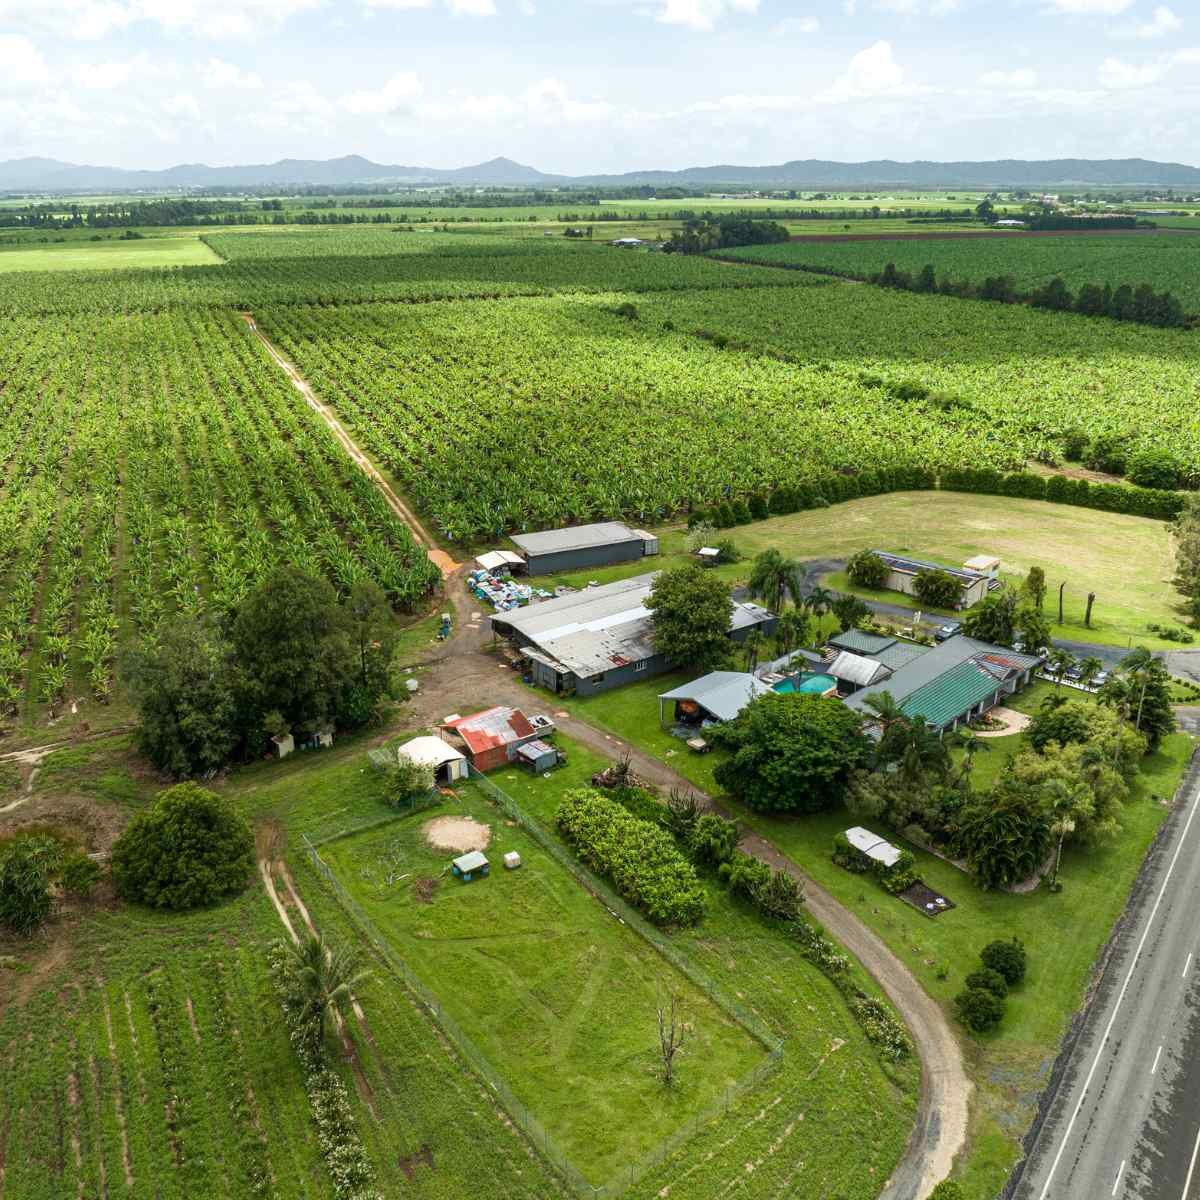 A drone shot of a banana plantation with banana trees, and buildings.